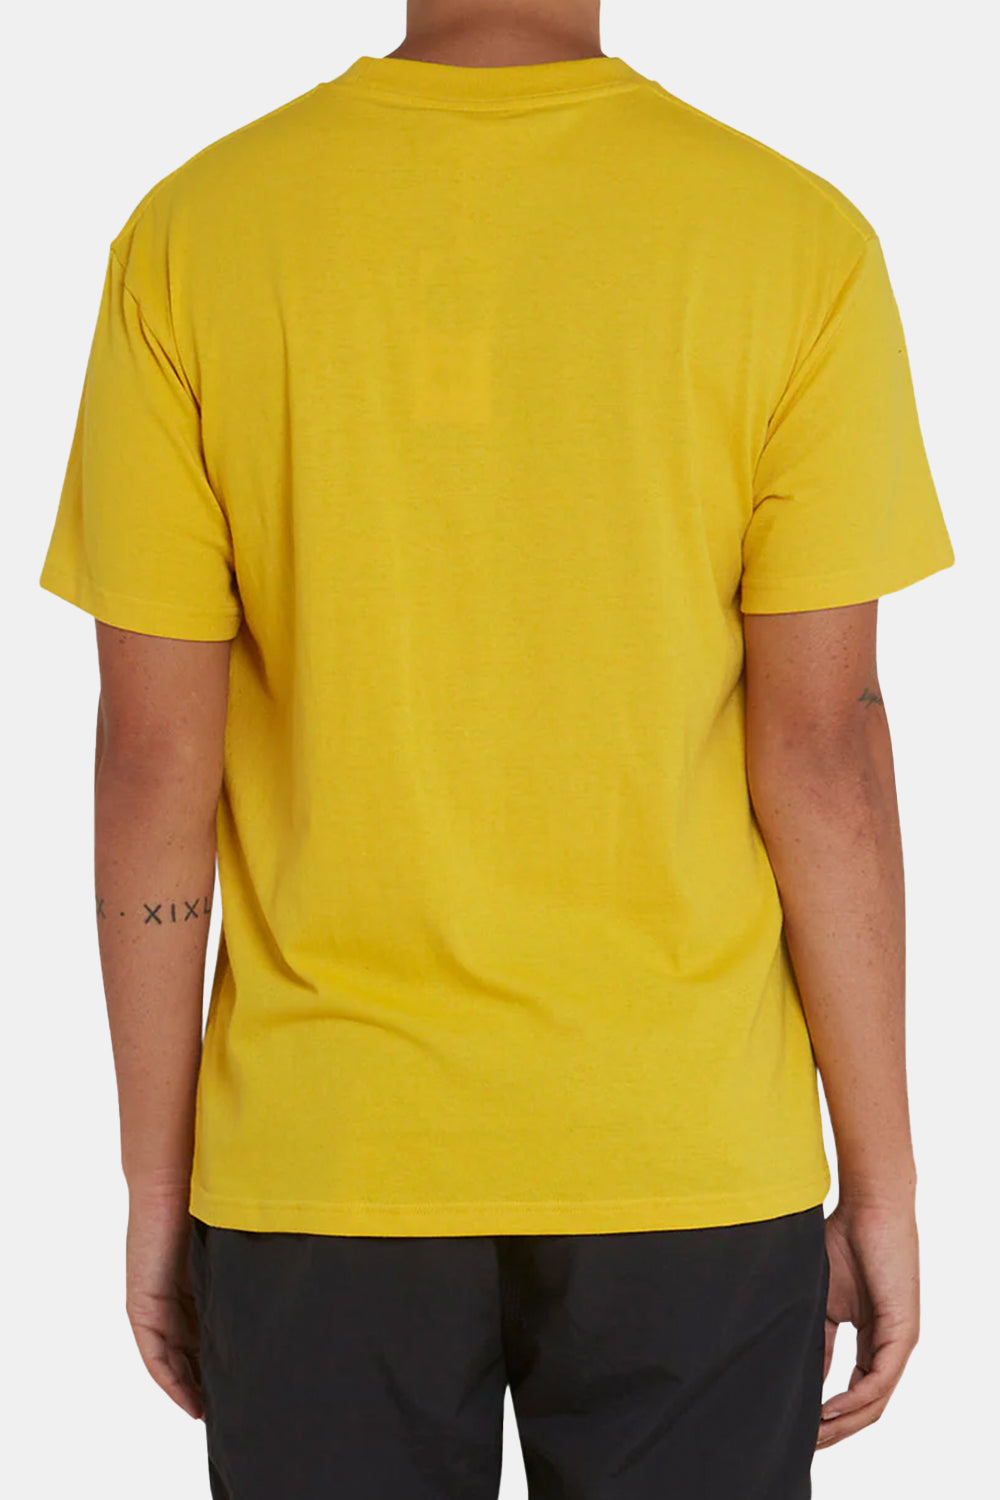 Deus Tango Pocket T-Shirt (Super Lemon)